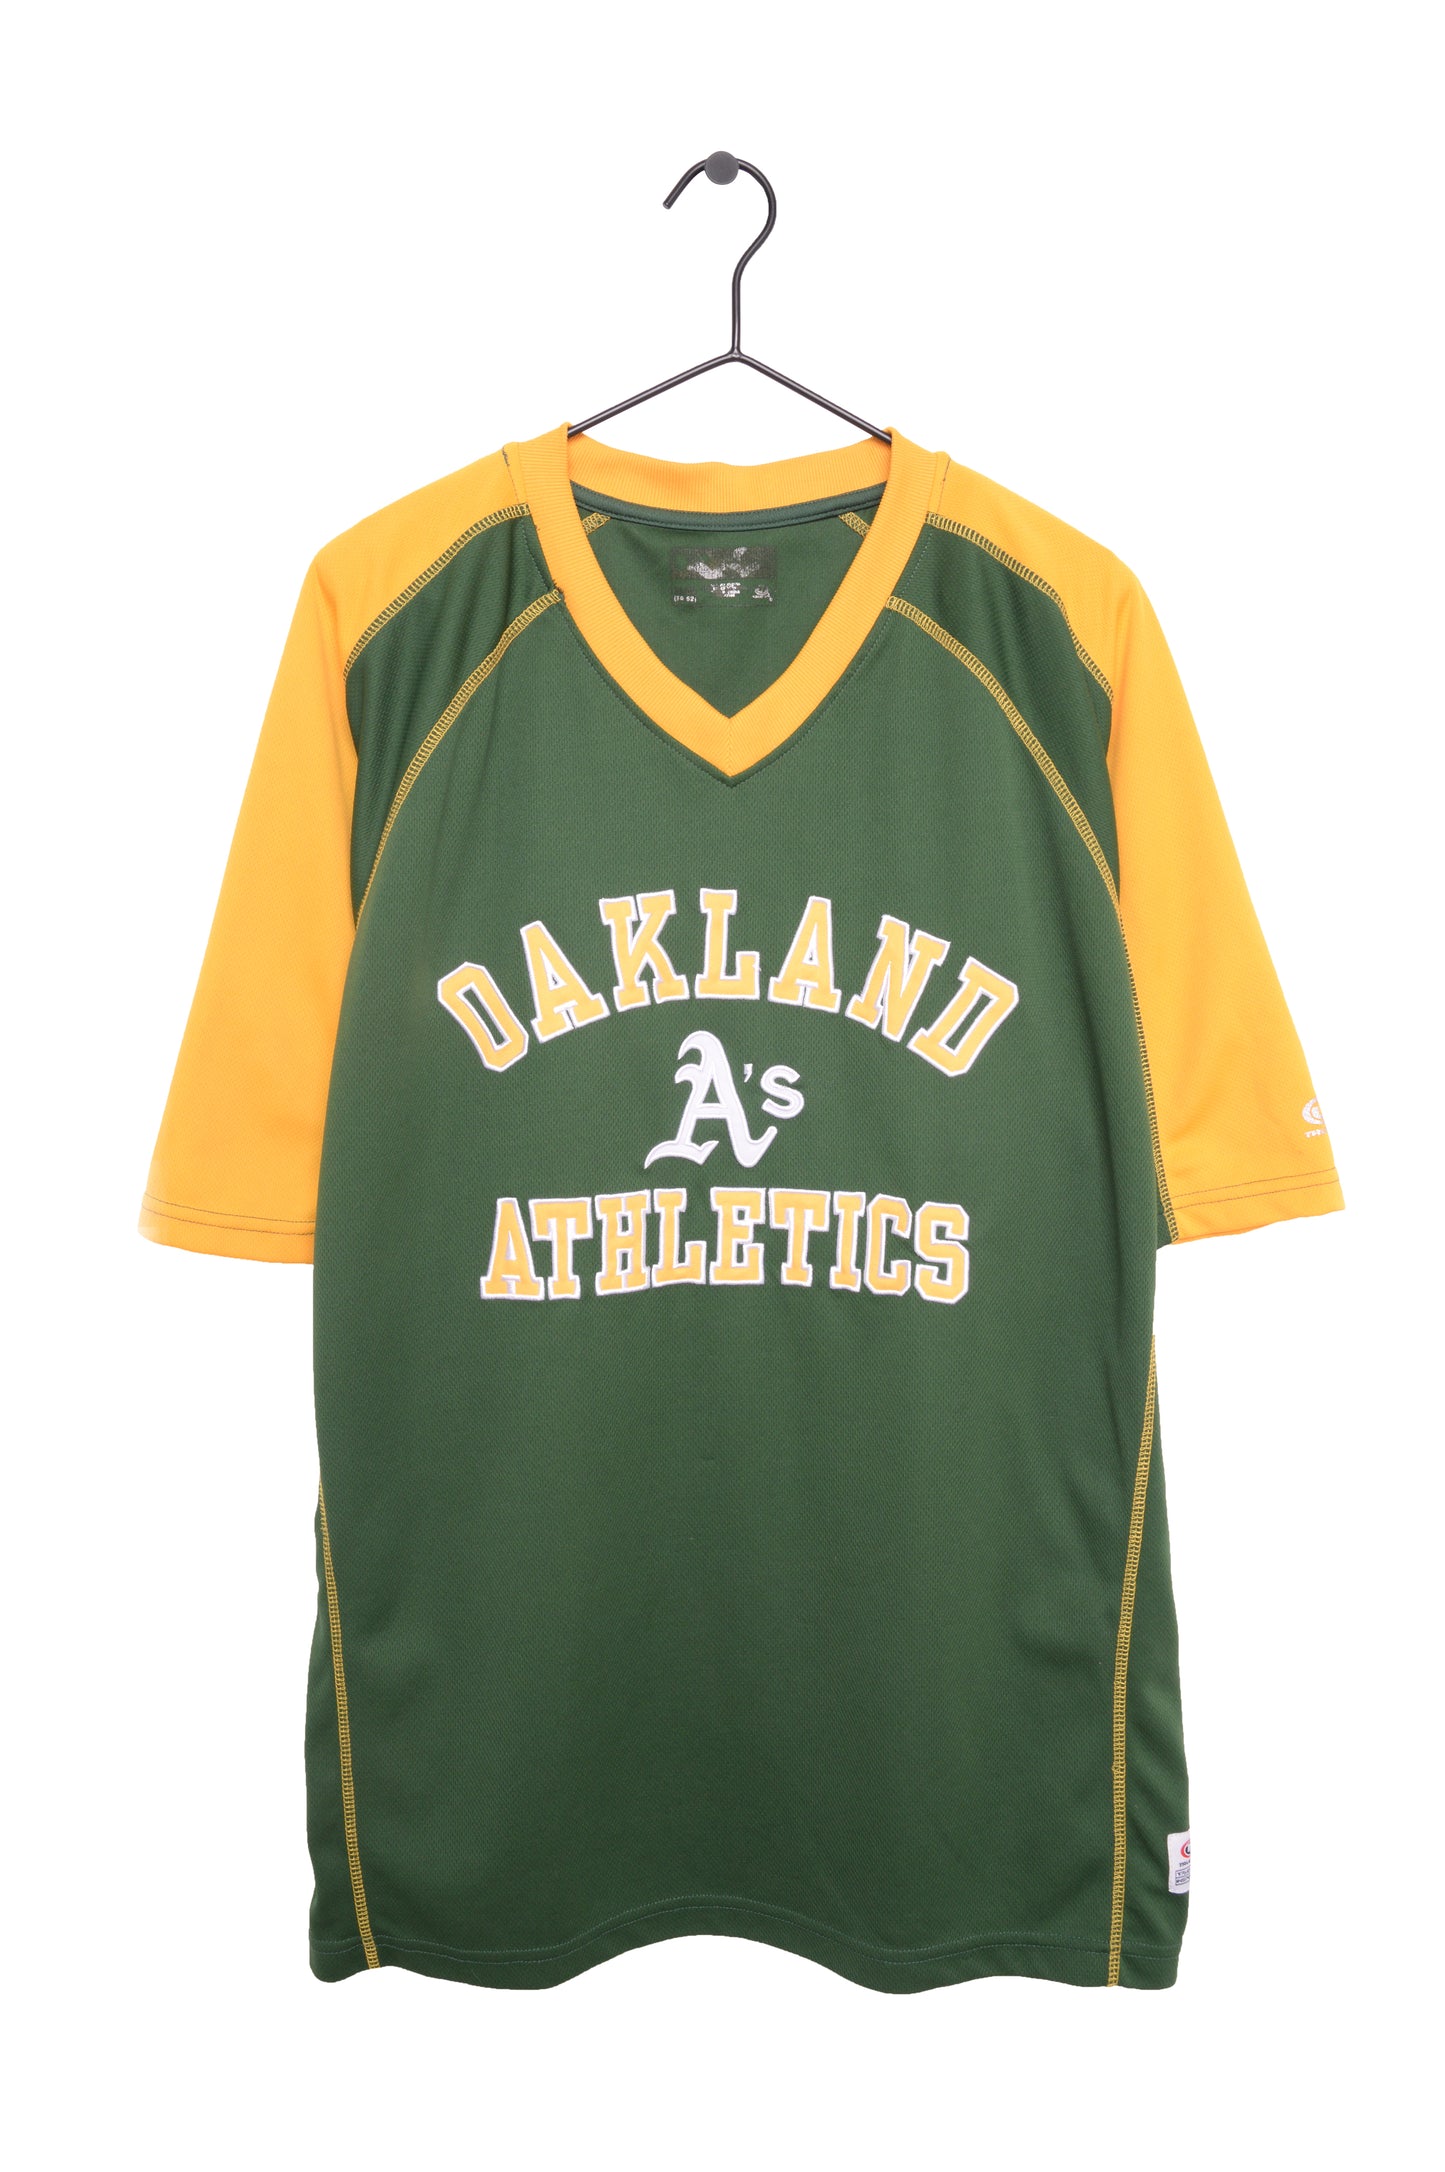 Oakland Athletics Jersey